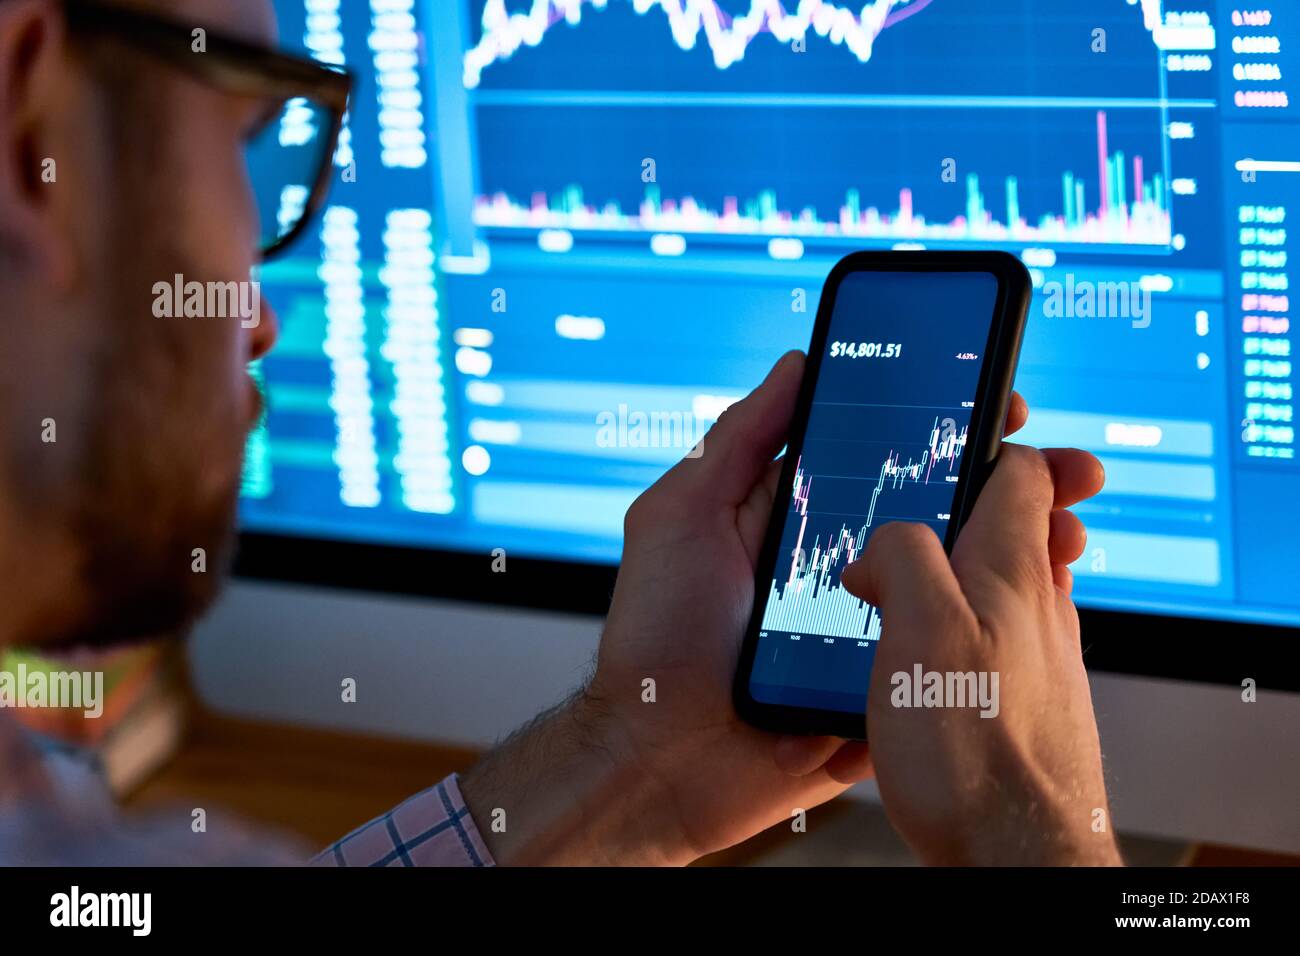 Trader using mobile phone app analytics for stock trading graph data analysis. Stock Photo